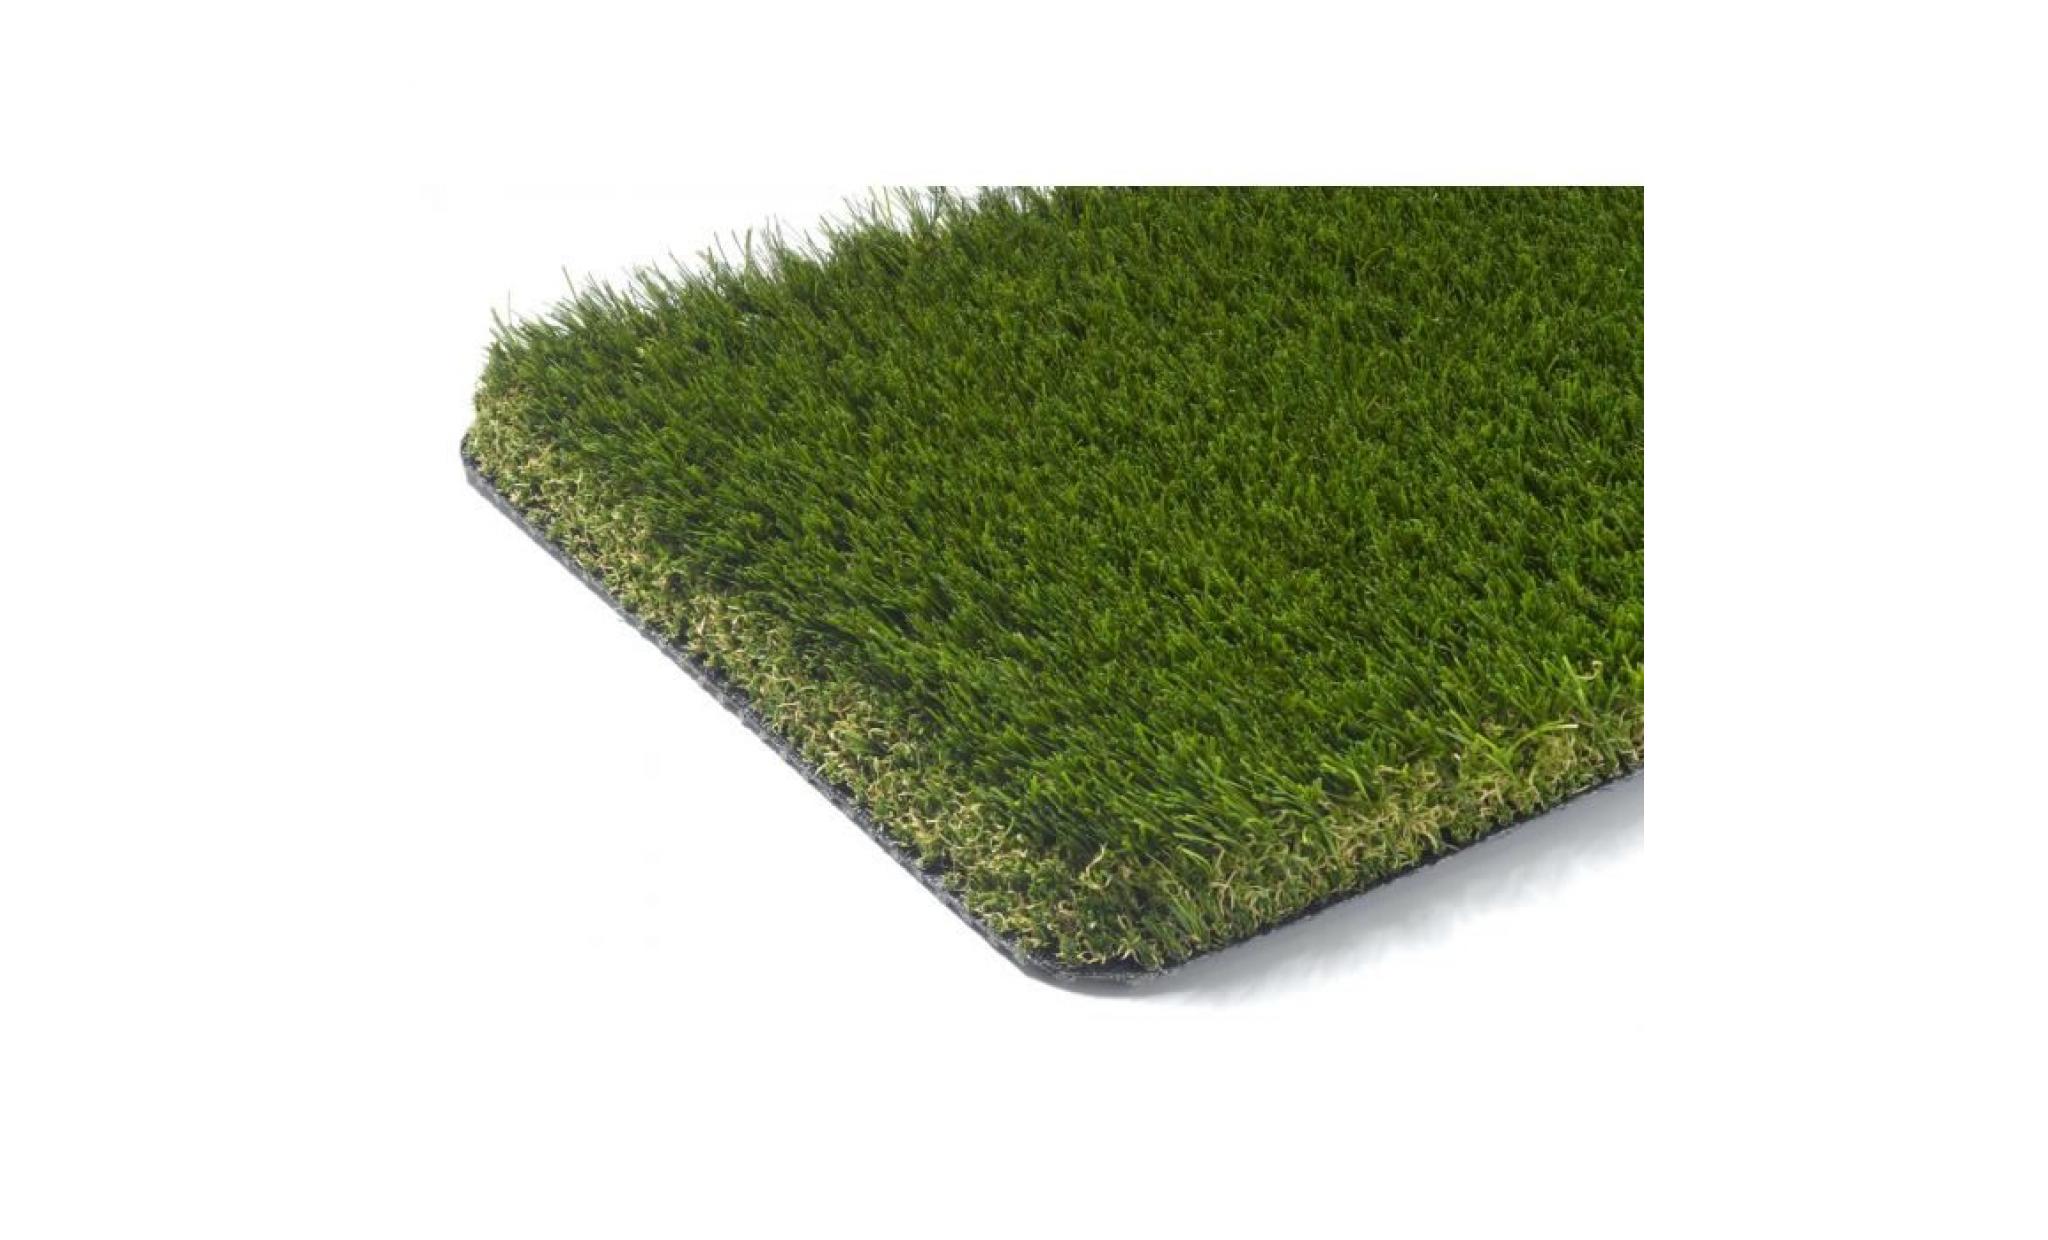 buckingham   tapis type luxe gazon artificiel – pour jardin, terrasse, balcon   vert  [200x100 cm]